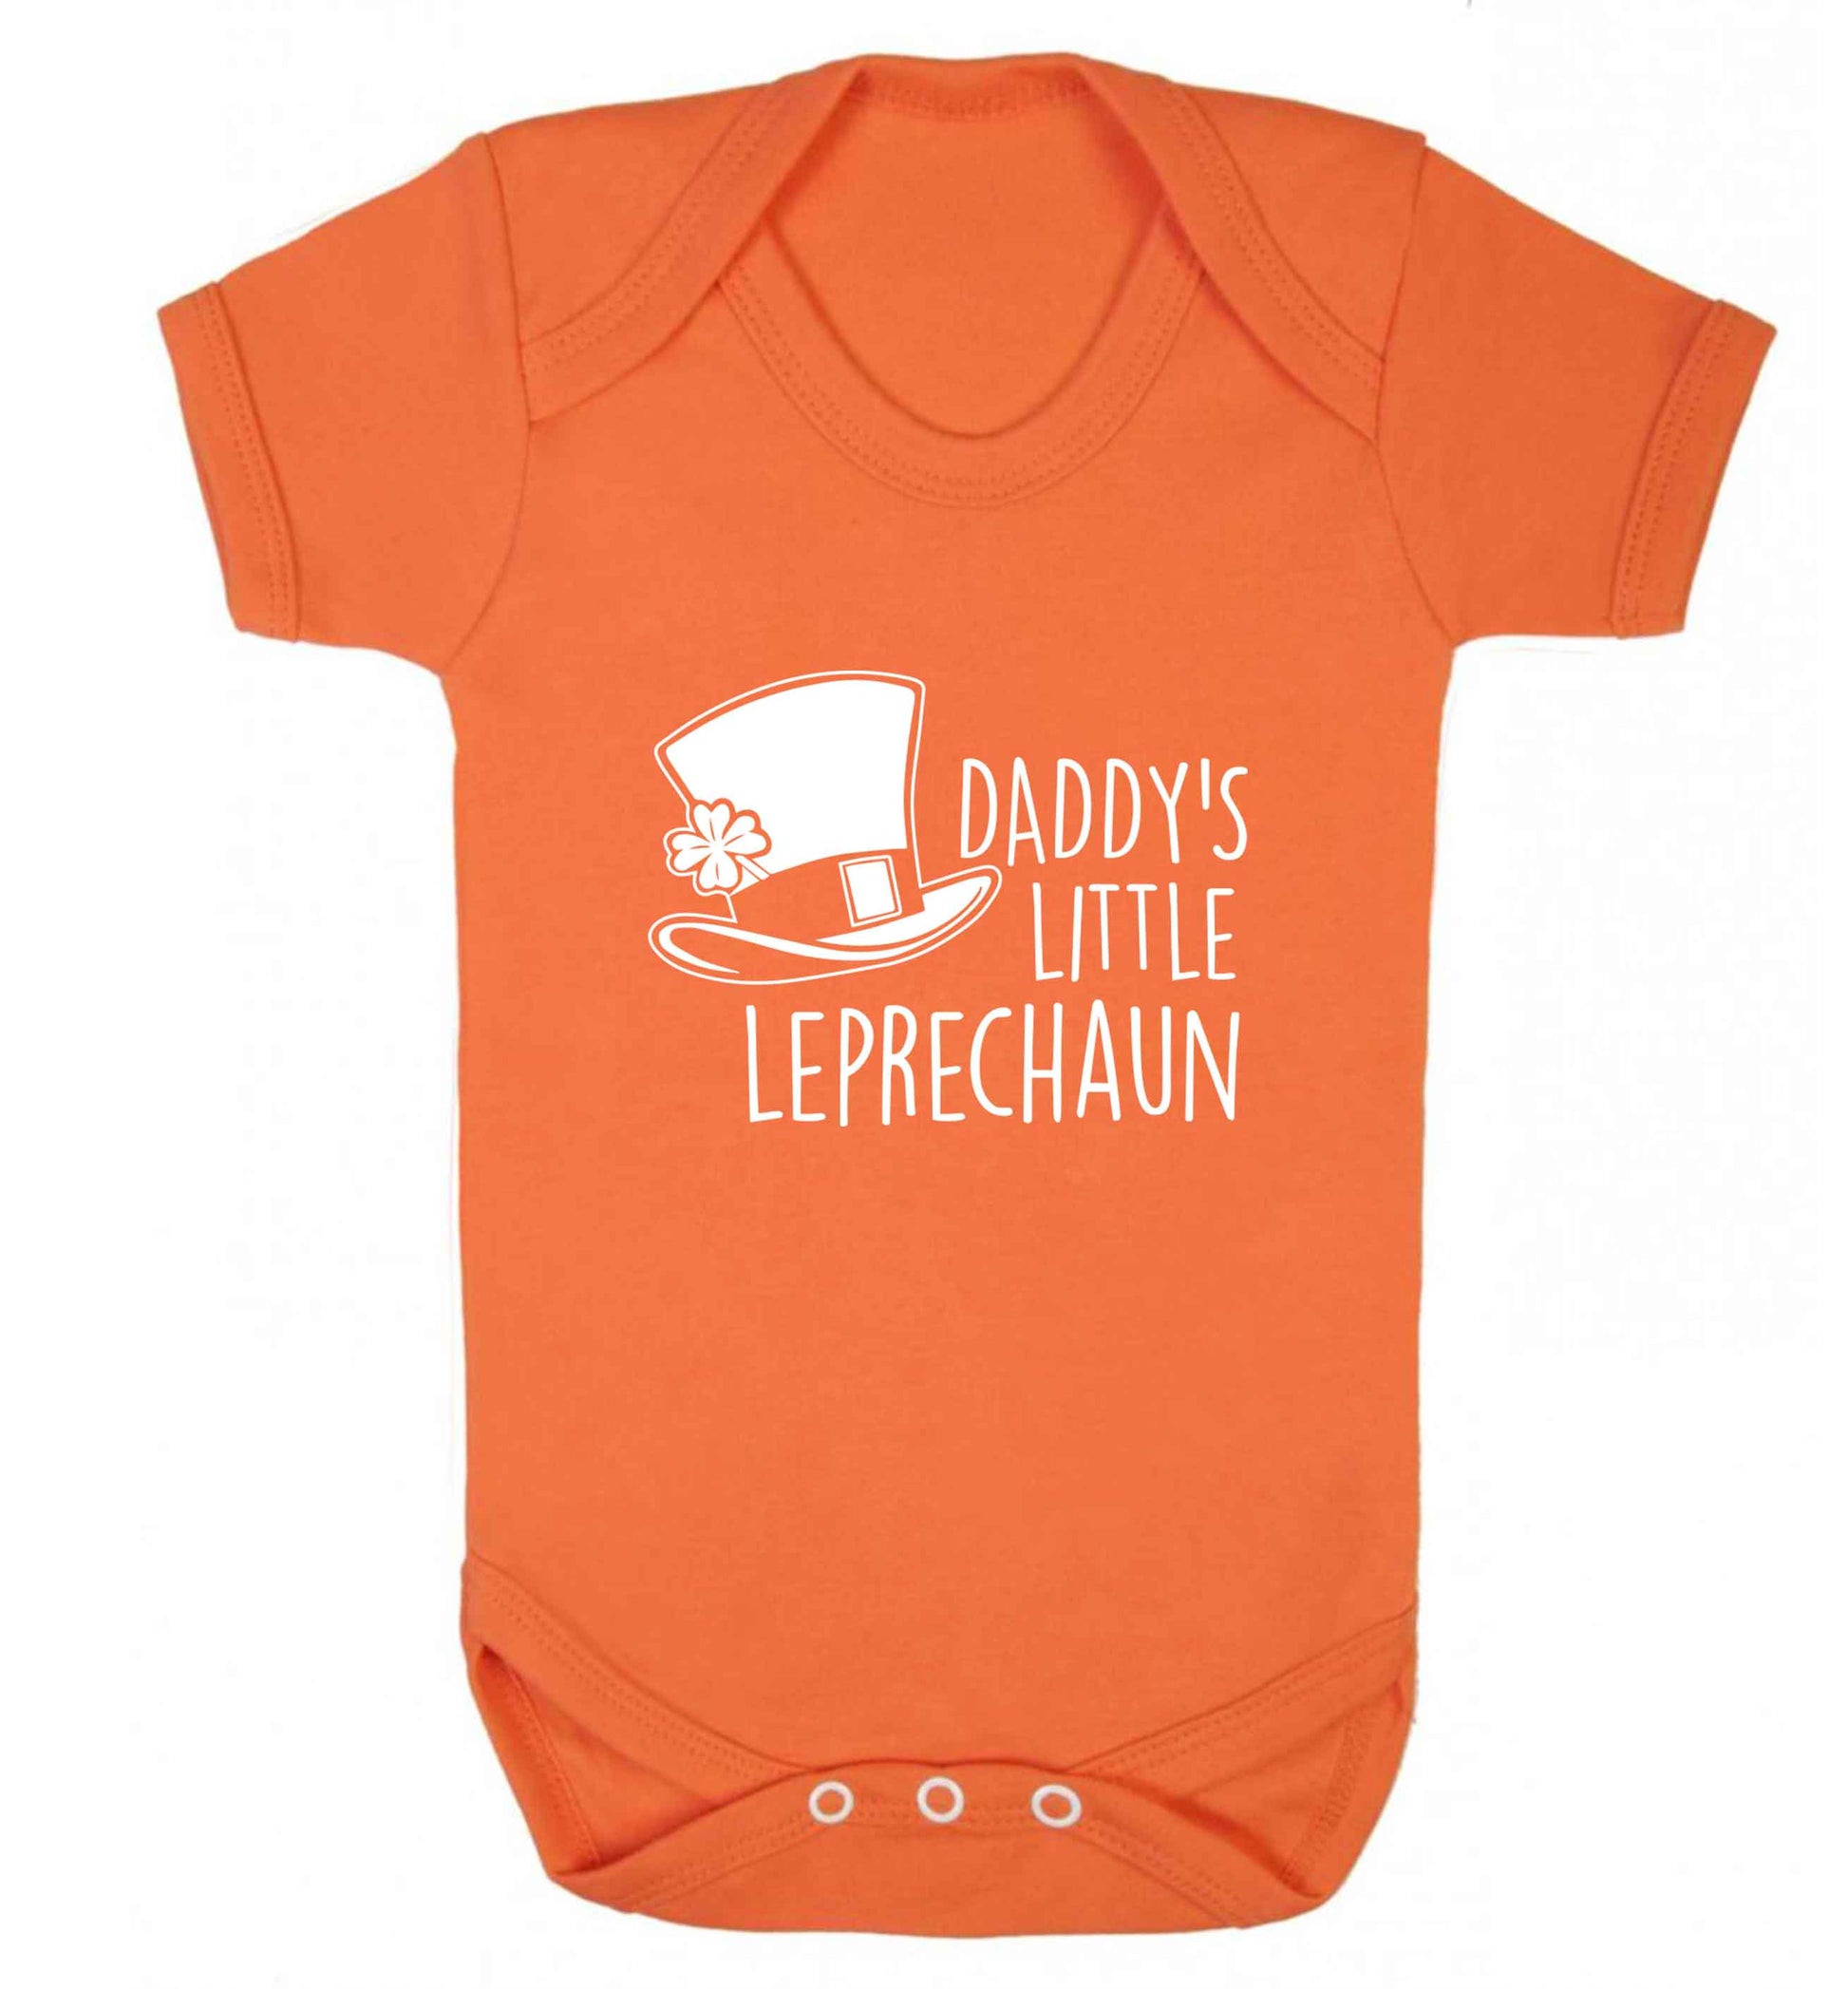 Daddy's lucky charm baby vest orange 18-24 months